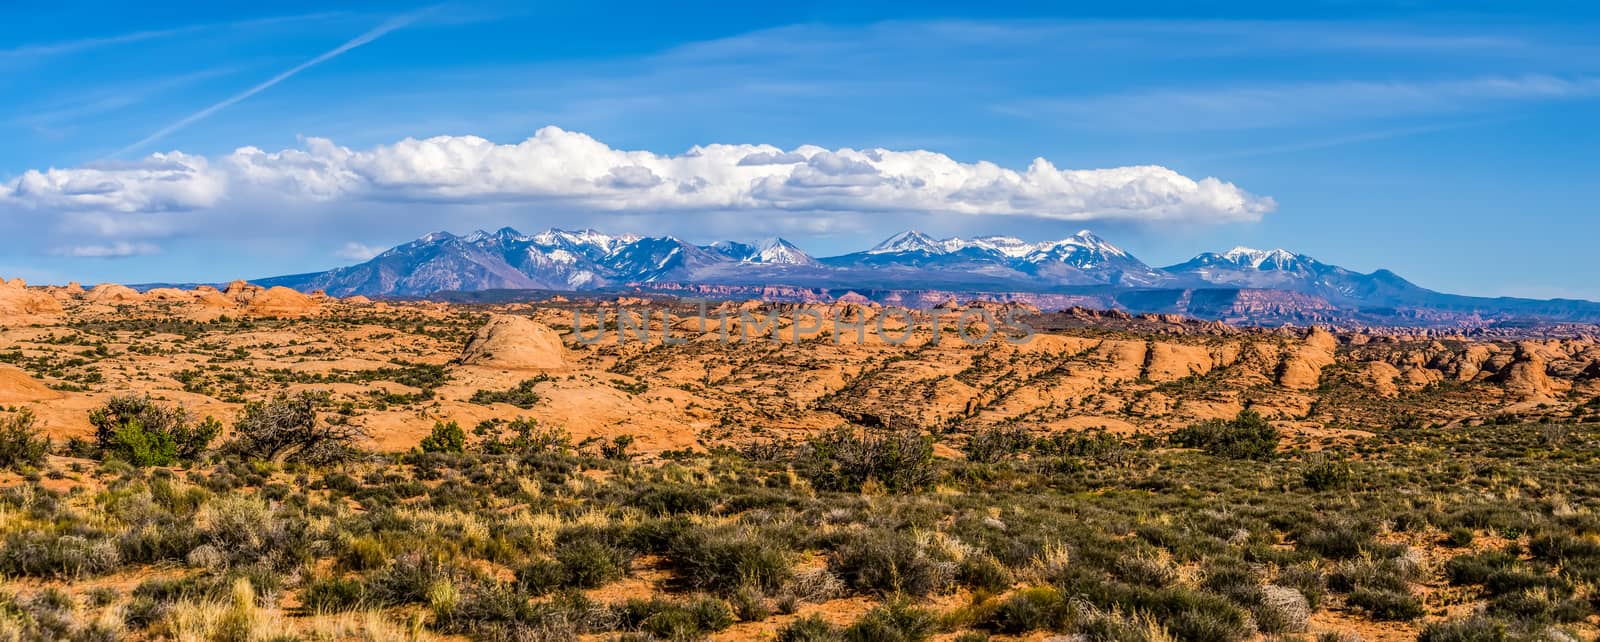 canyon badlands and colorado rockies lanadscape by digidreamgrafix